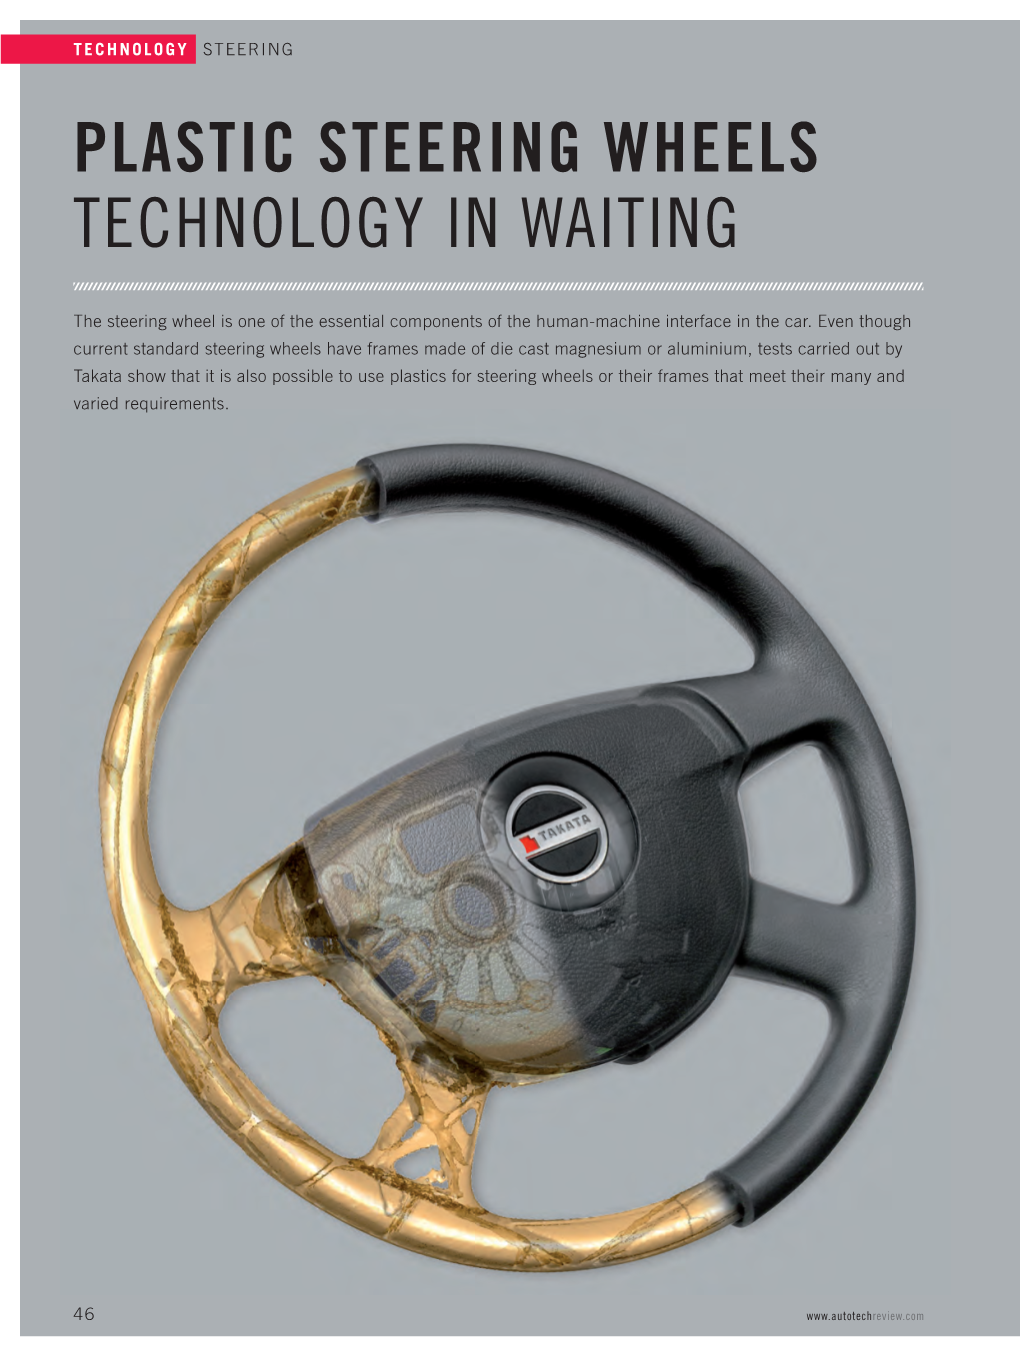 Plastic Steering Wheels Technology in Waiting